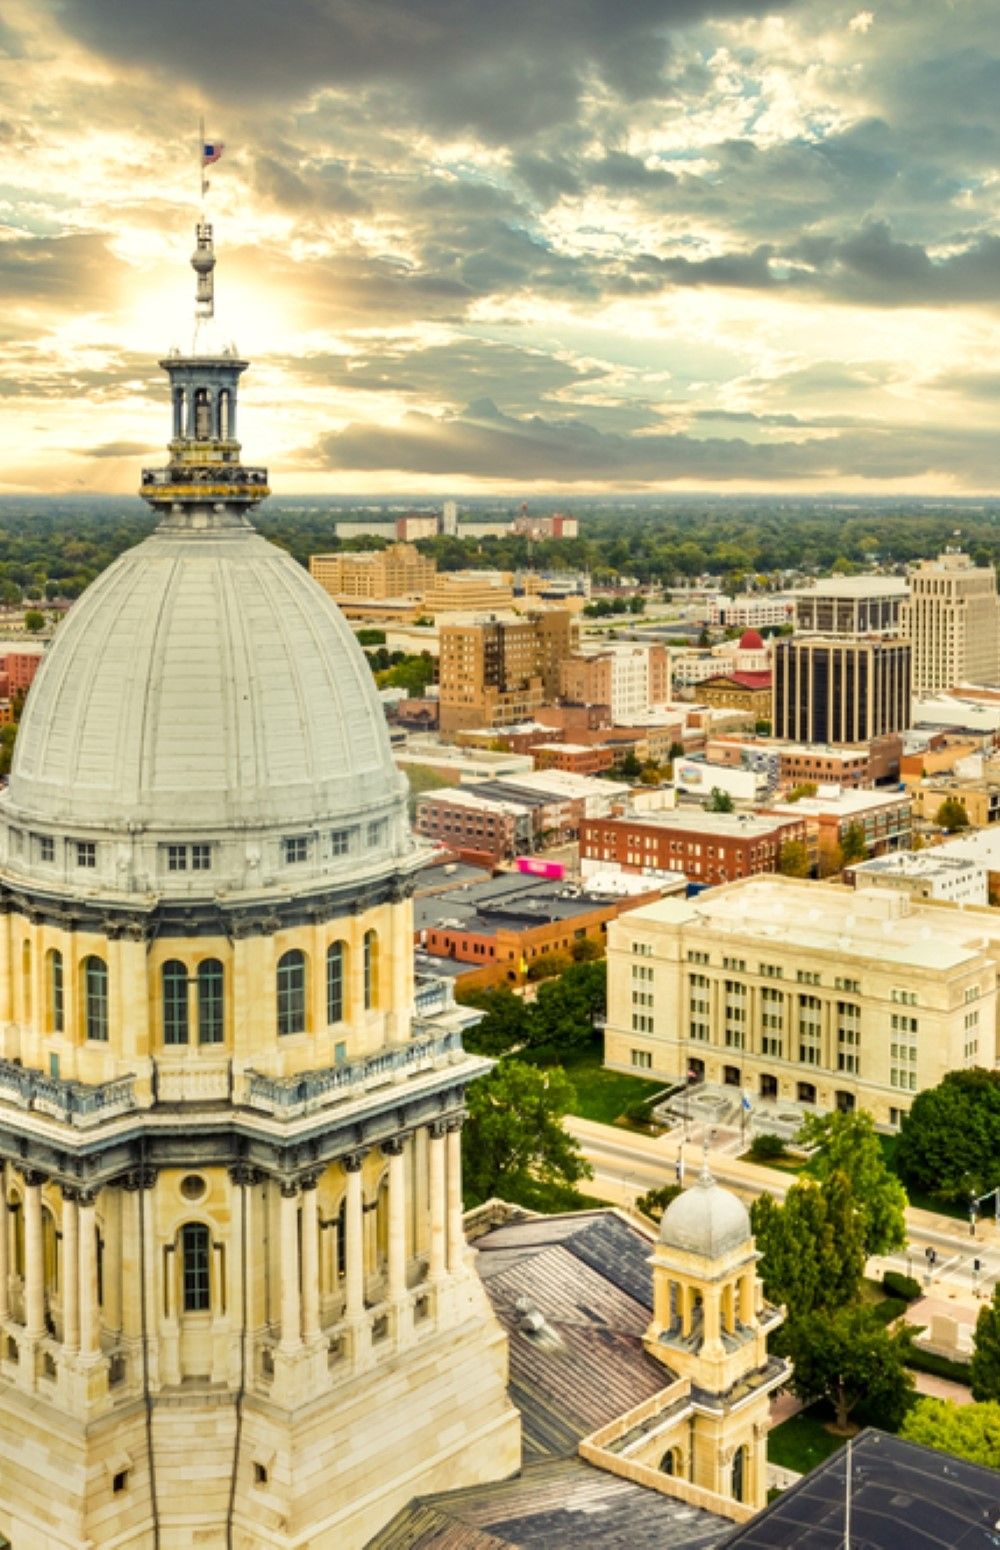 Illinois State Capitol dome in Springfield, Illinois